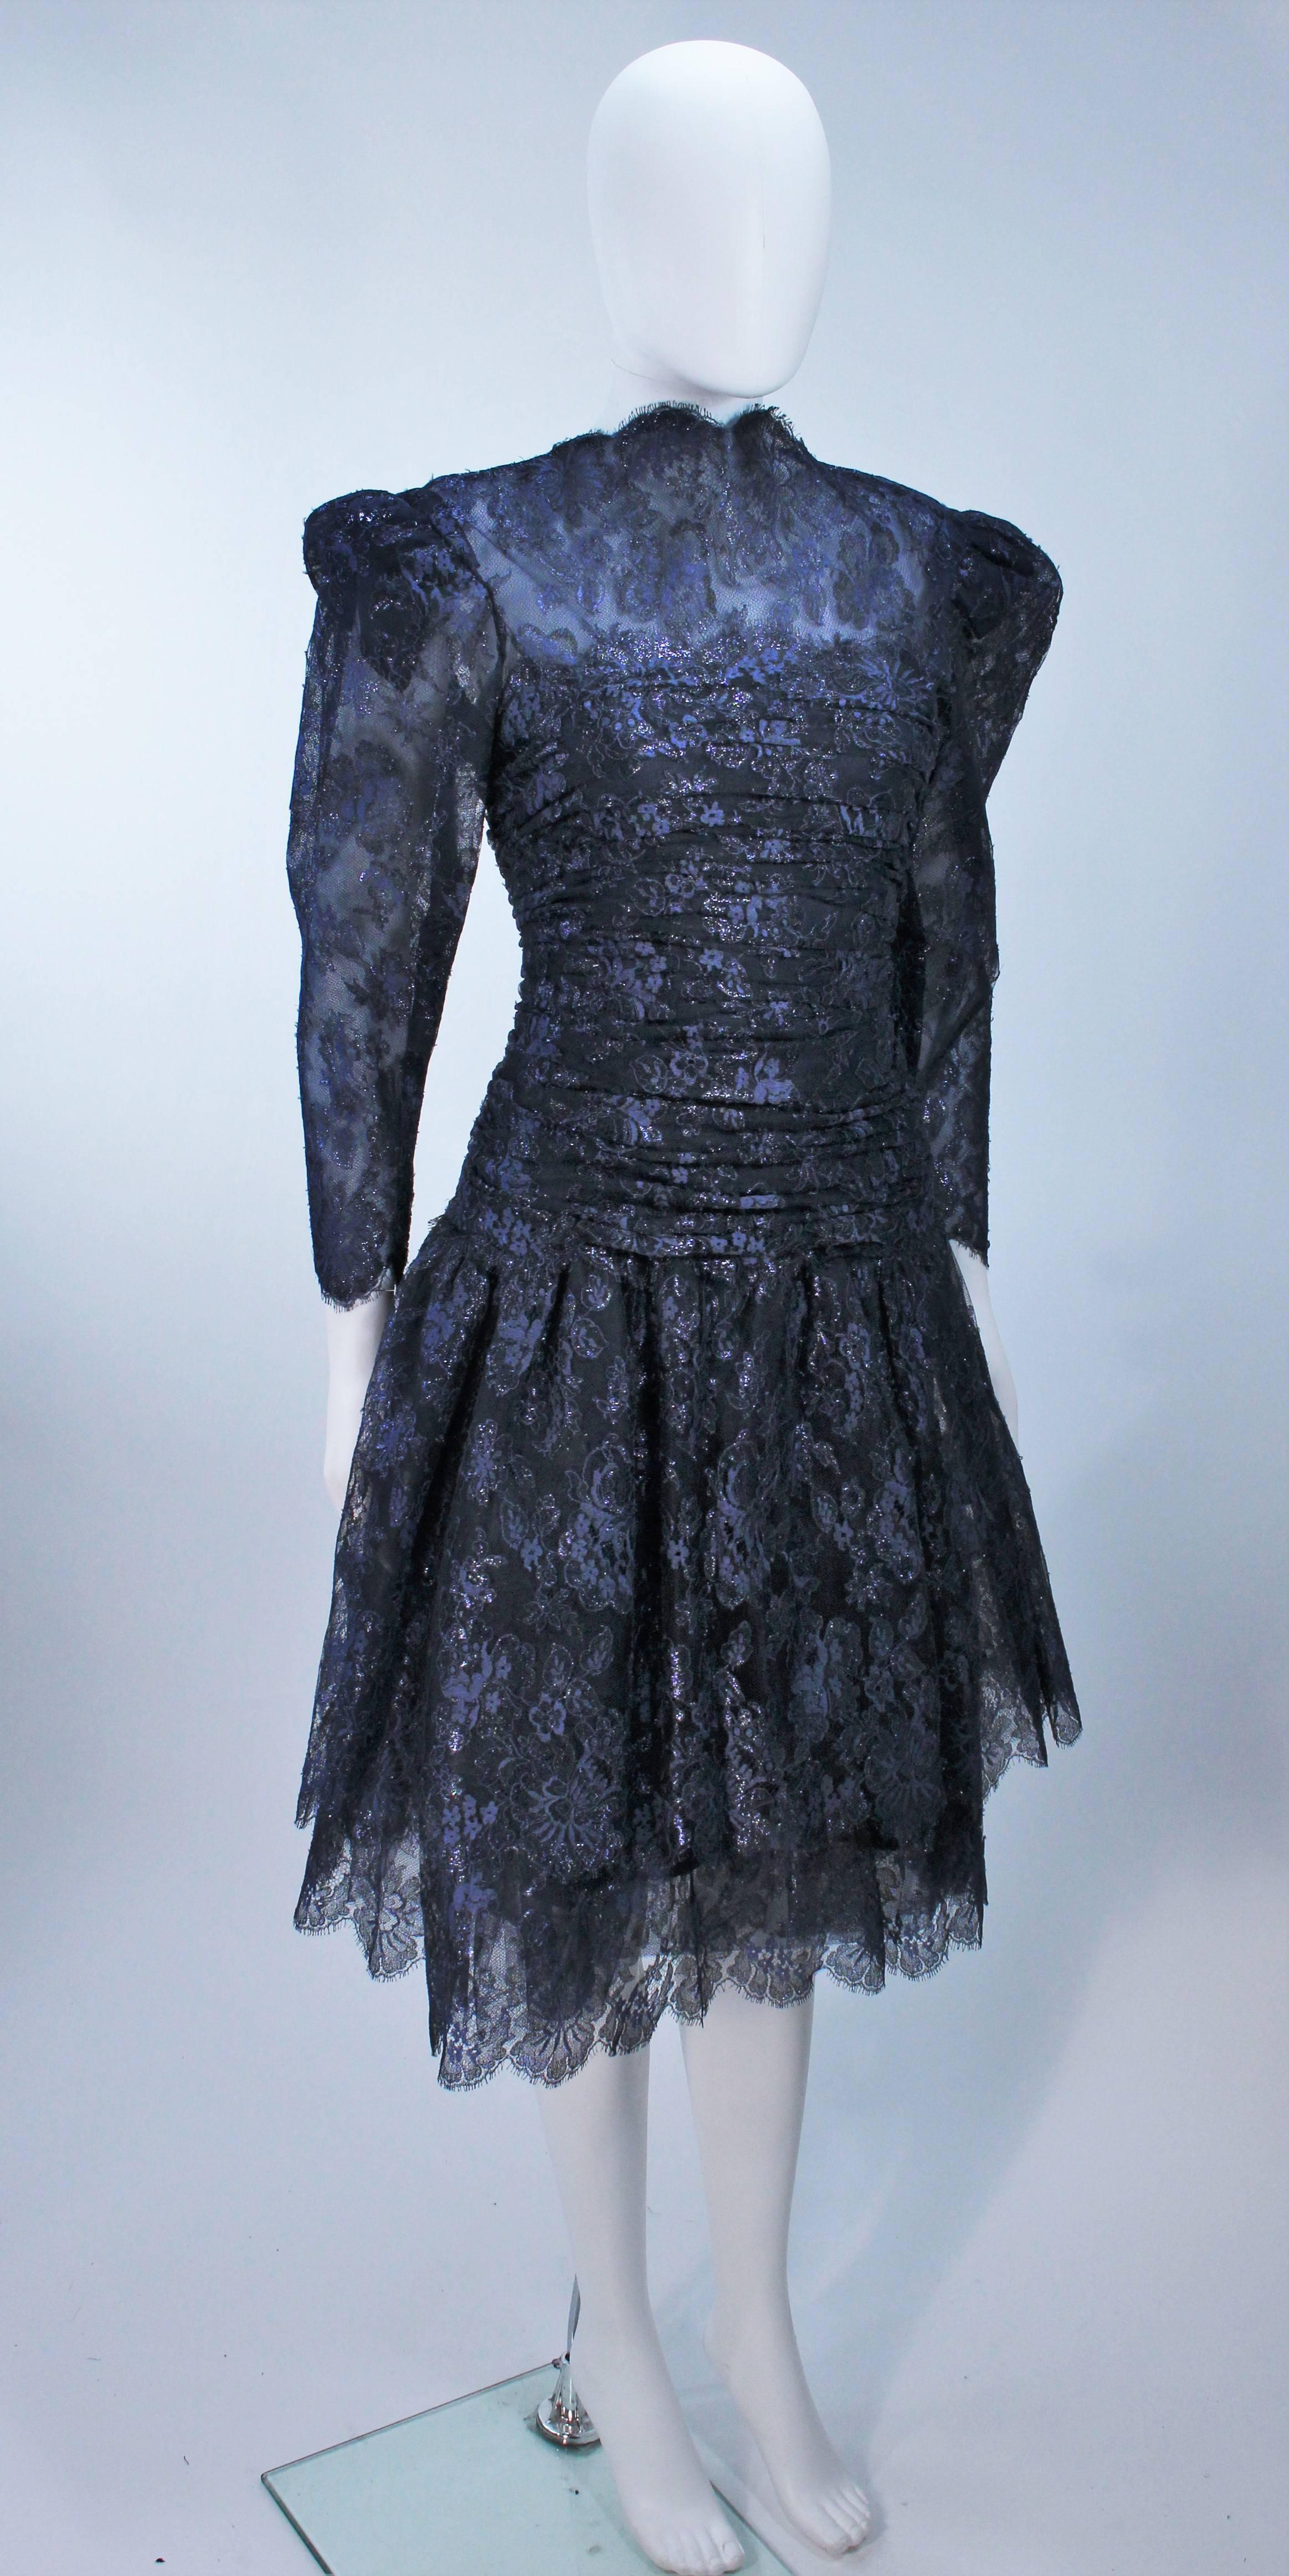 Black ARNOLD SCAASI Navy Metallic Lace Cocktail Dress Size 8-10